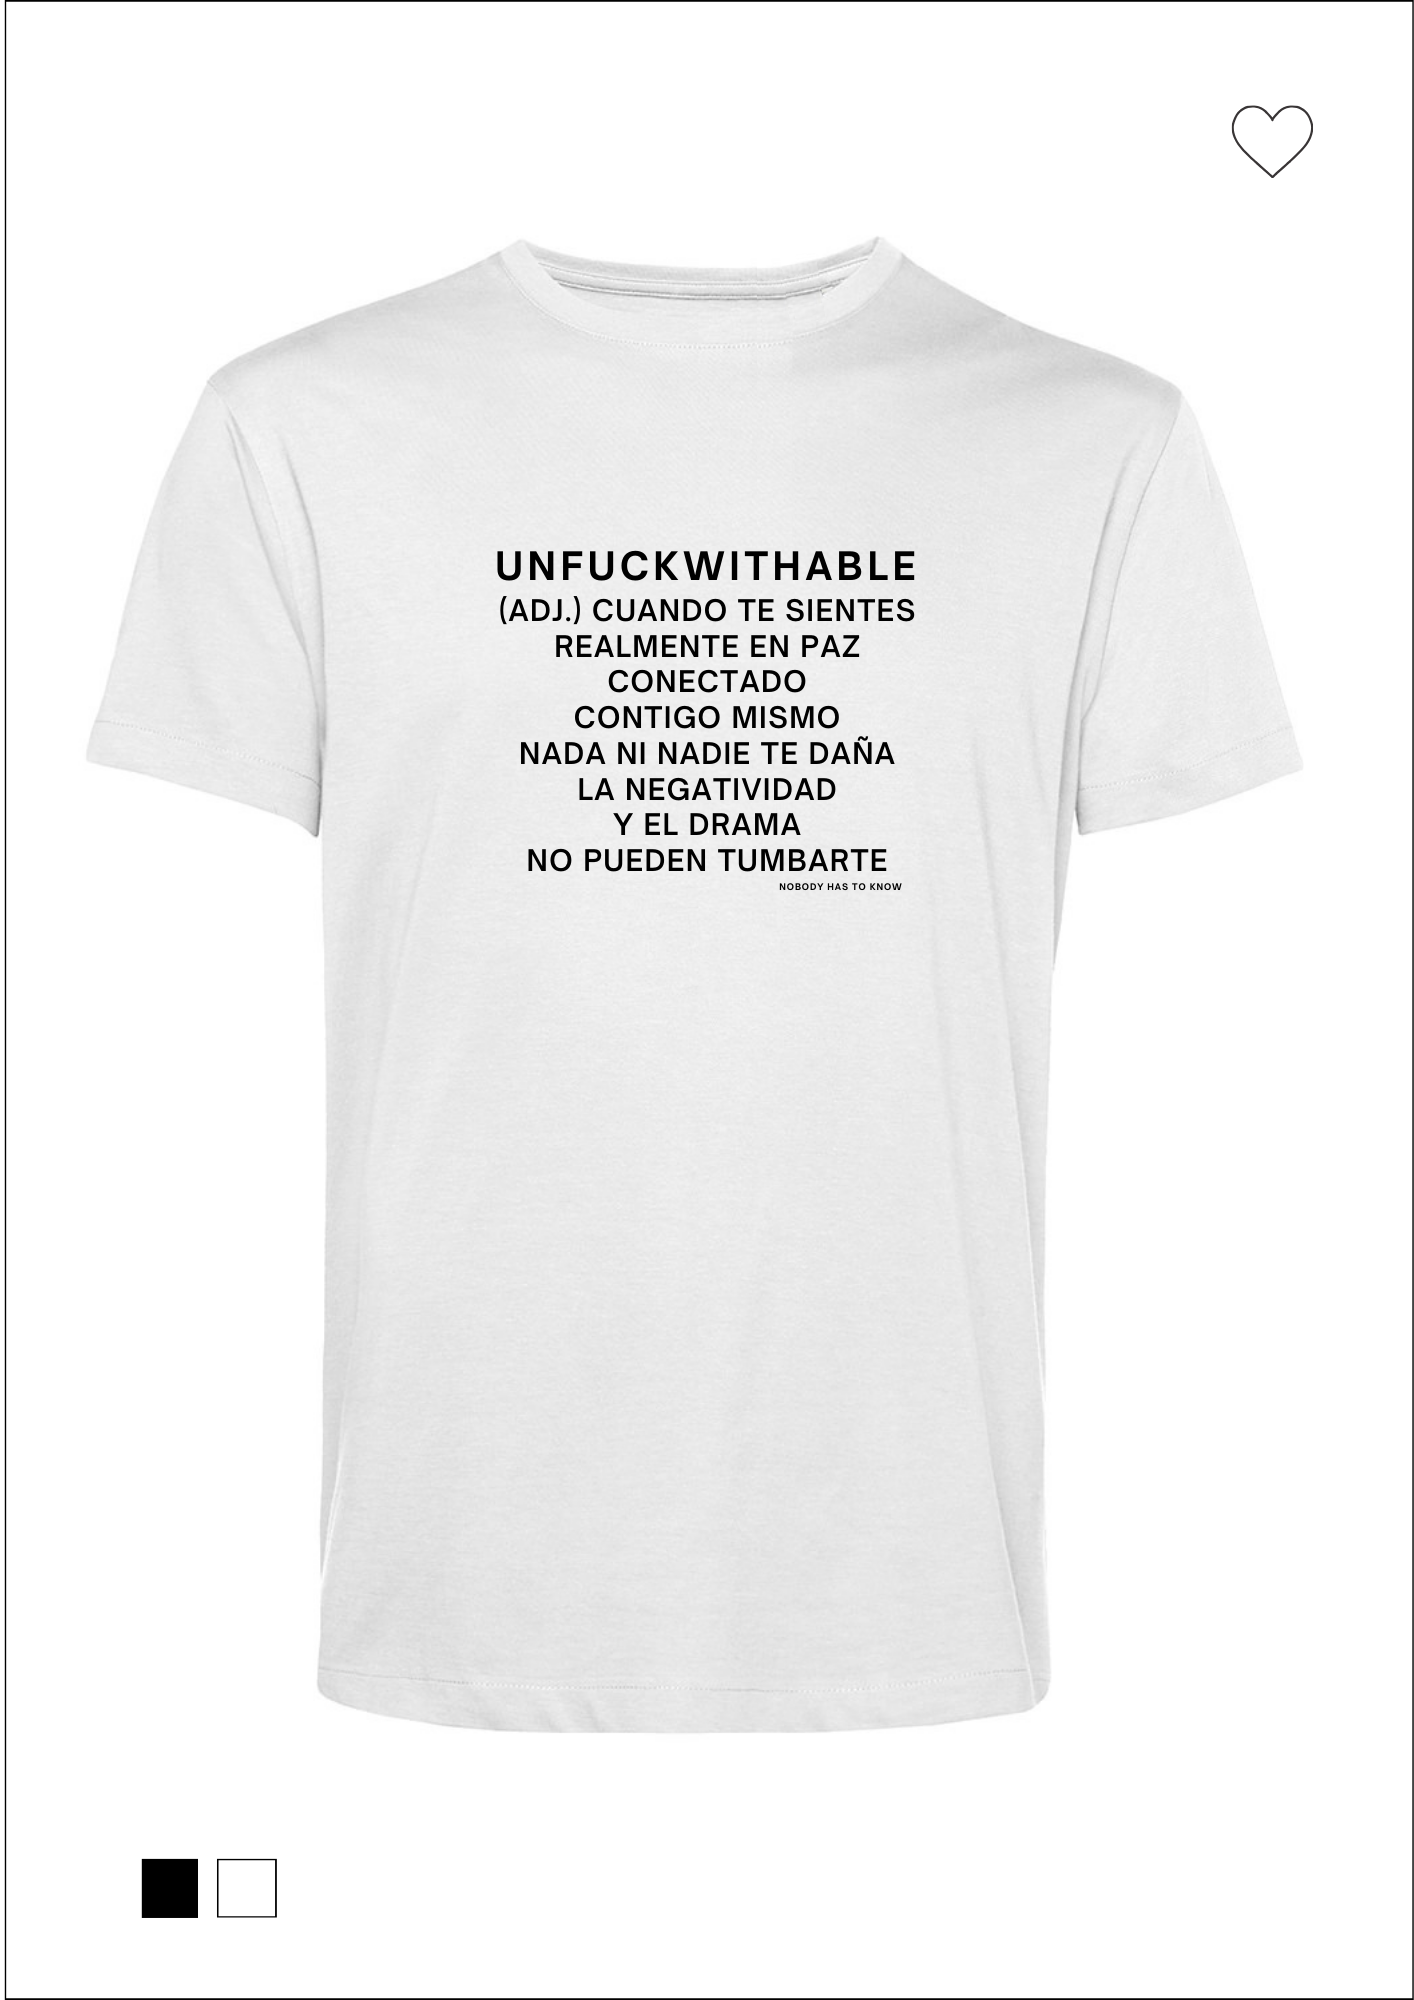 Unfuckwithable (S) t-shirt